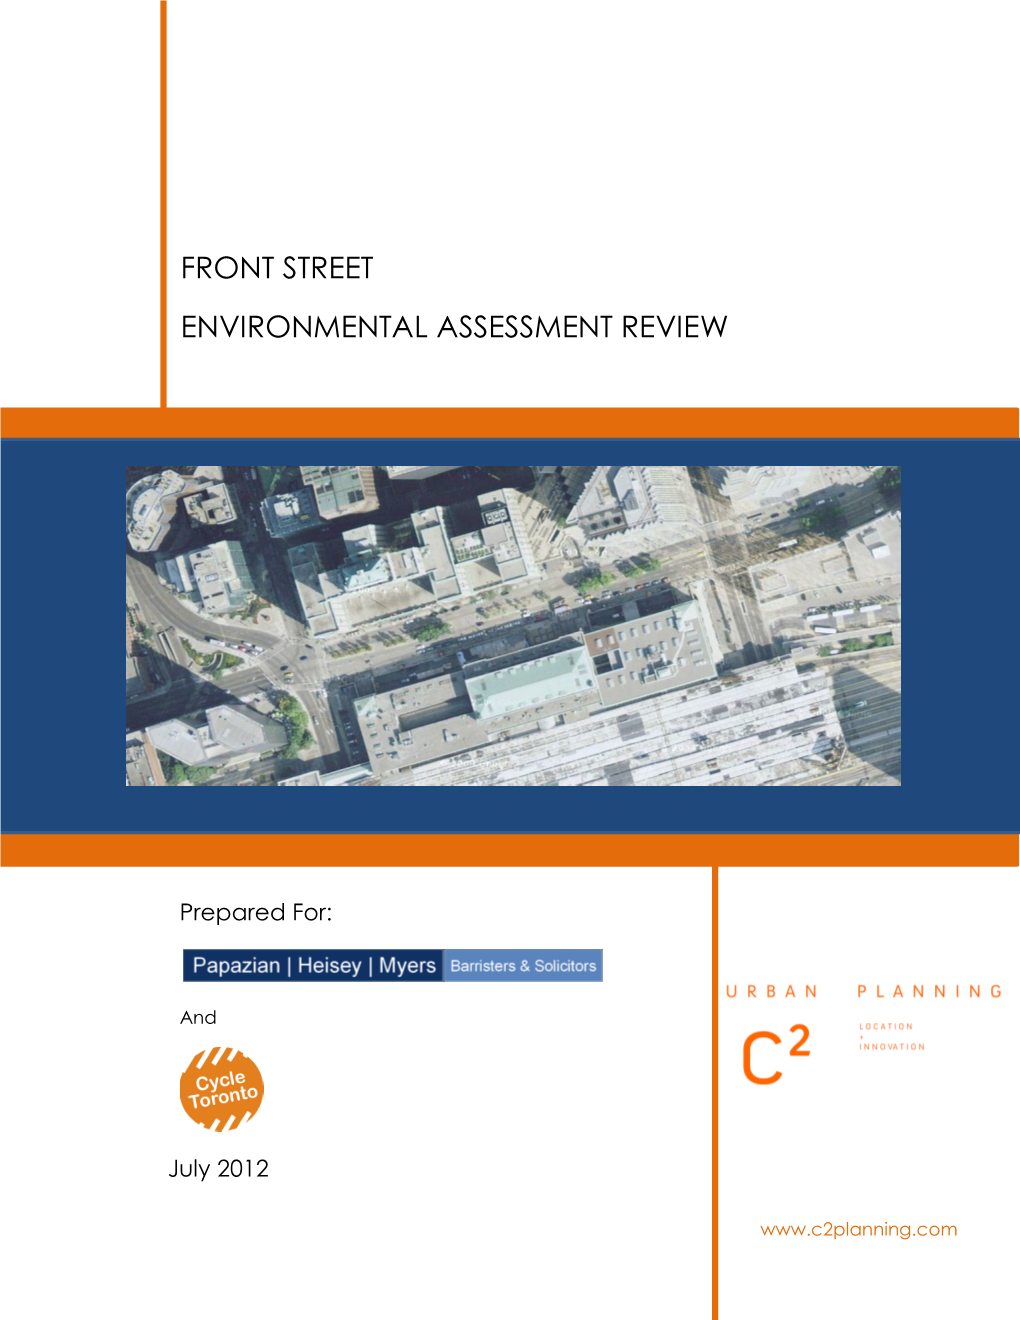 Front Street Environmental Assessment Review